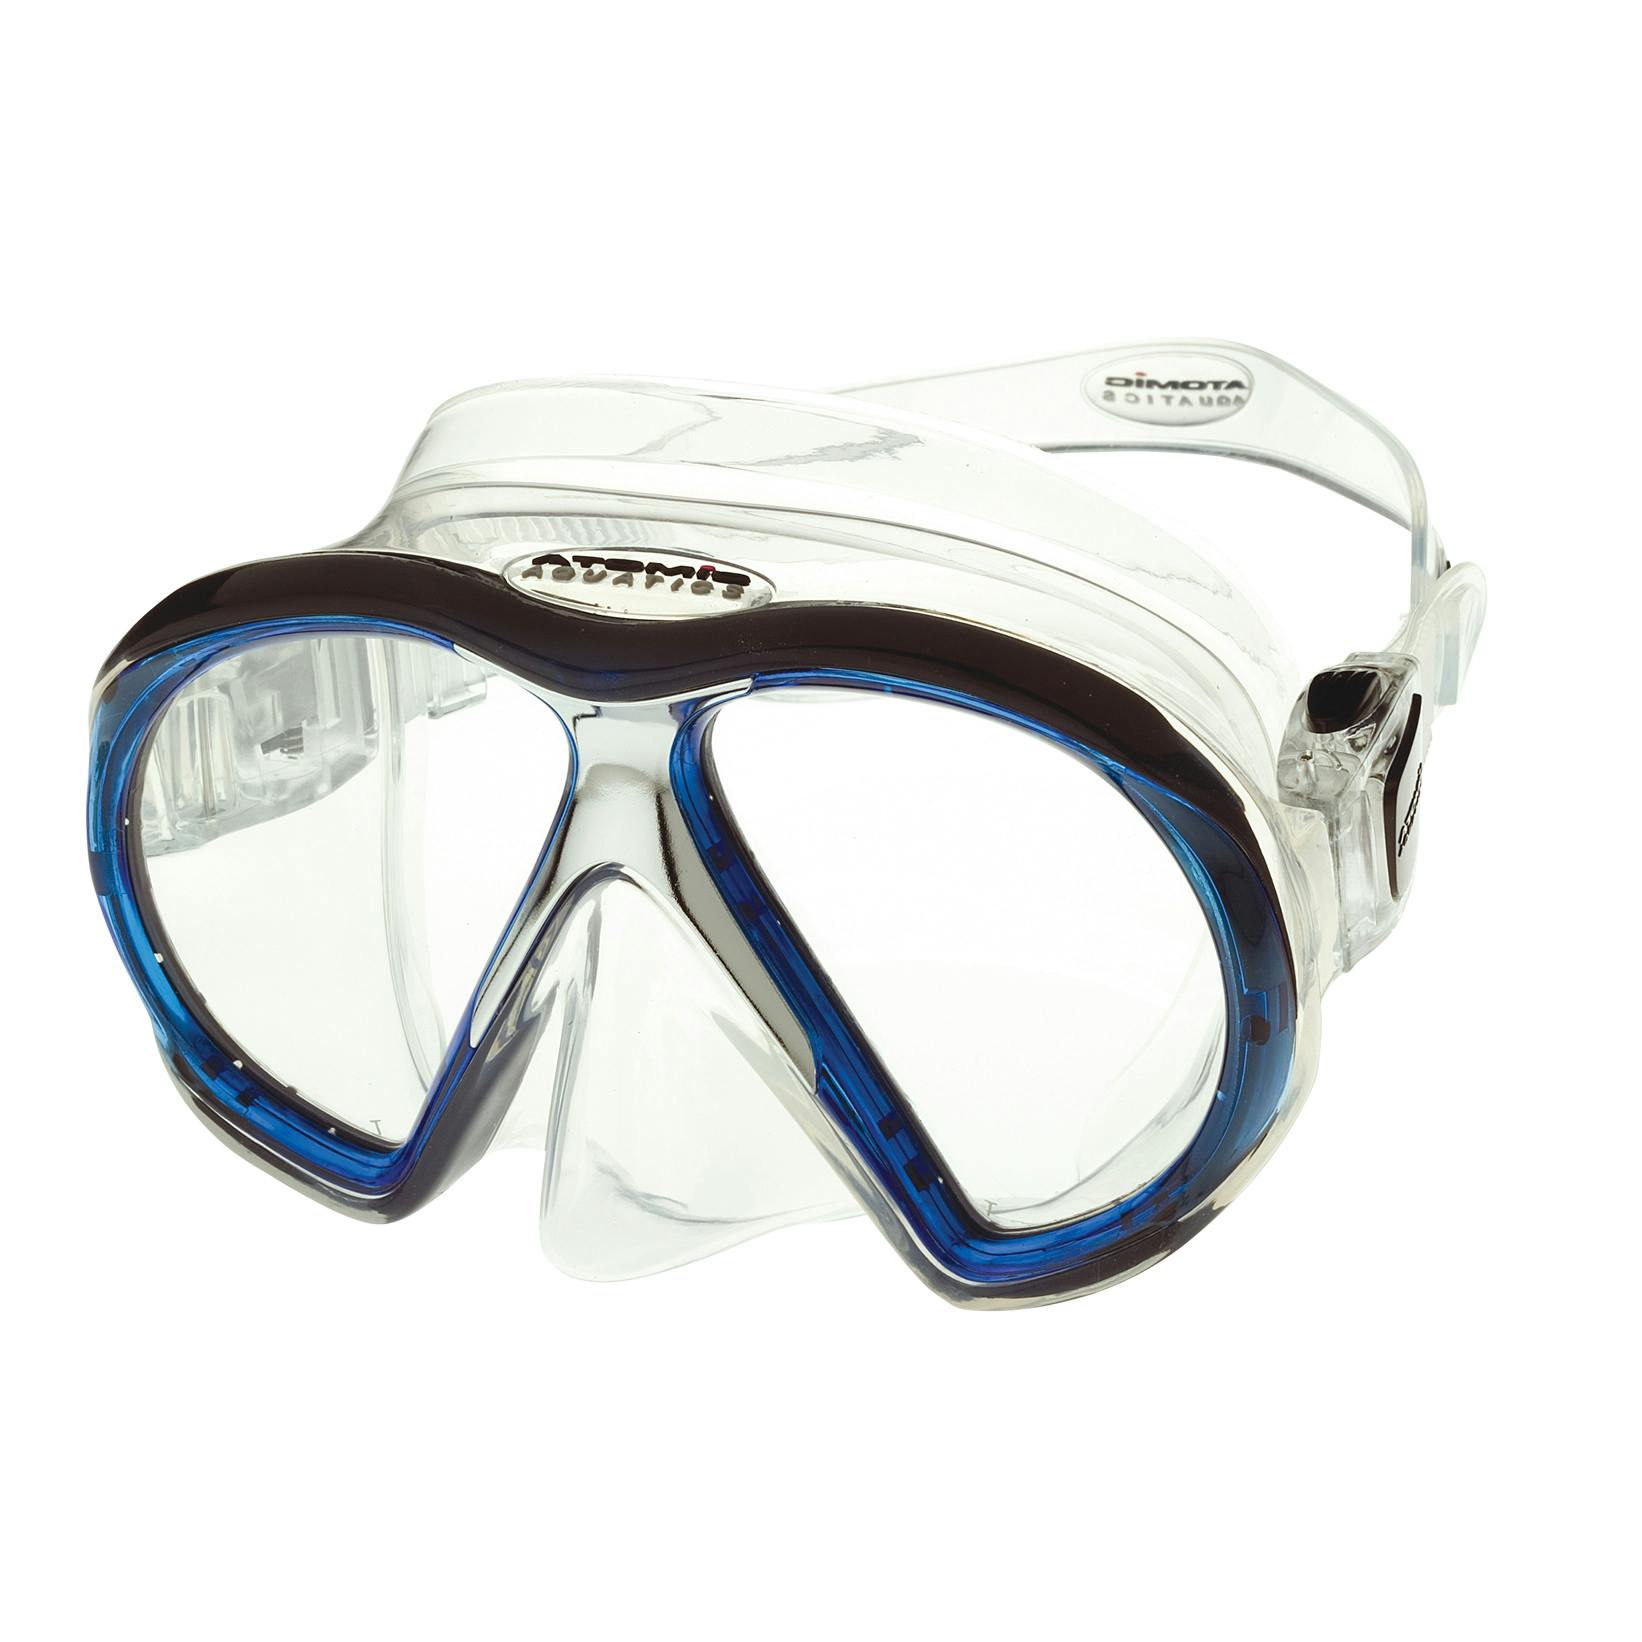 Atomic SubFrame Mask, Two Lens (Regular Fit) - Clear/Blue